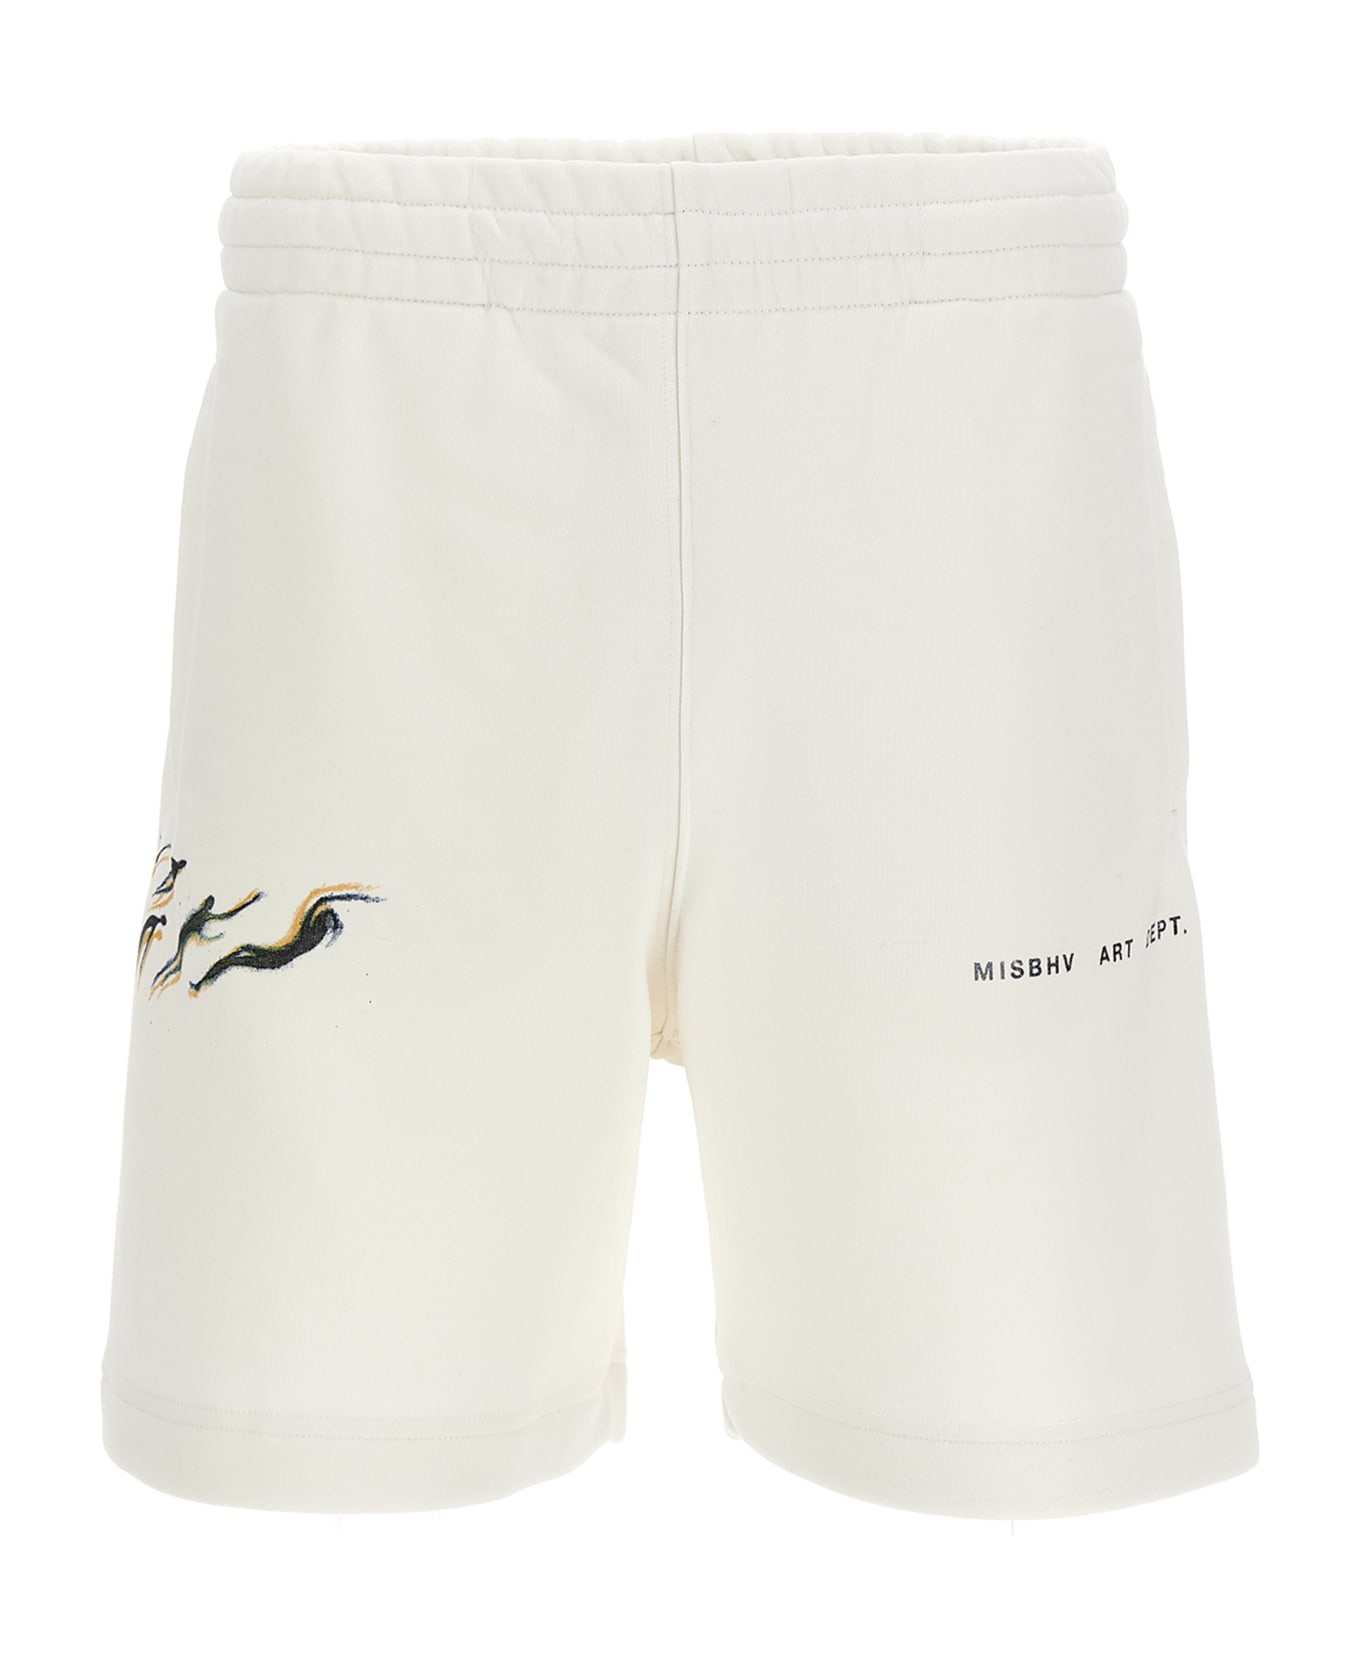 MISBHV Art Department Bermuda Shorts - White